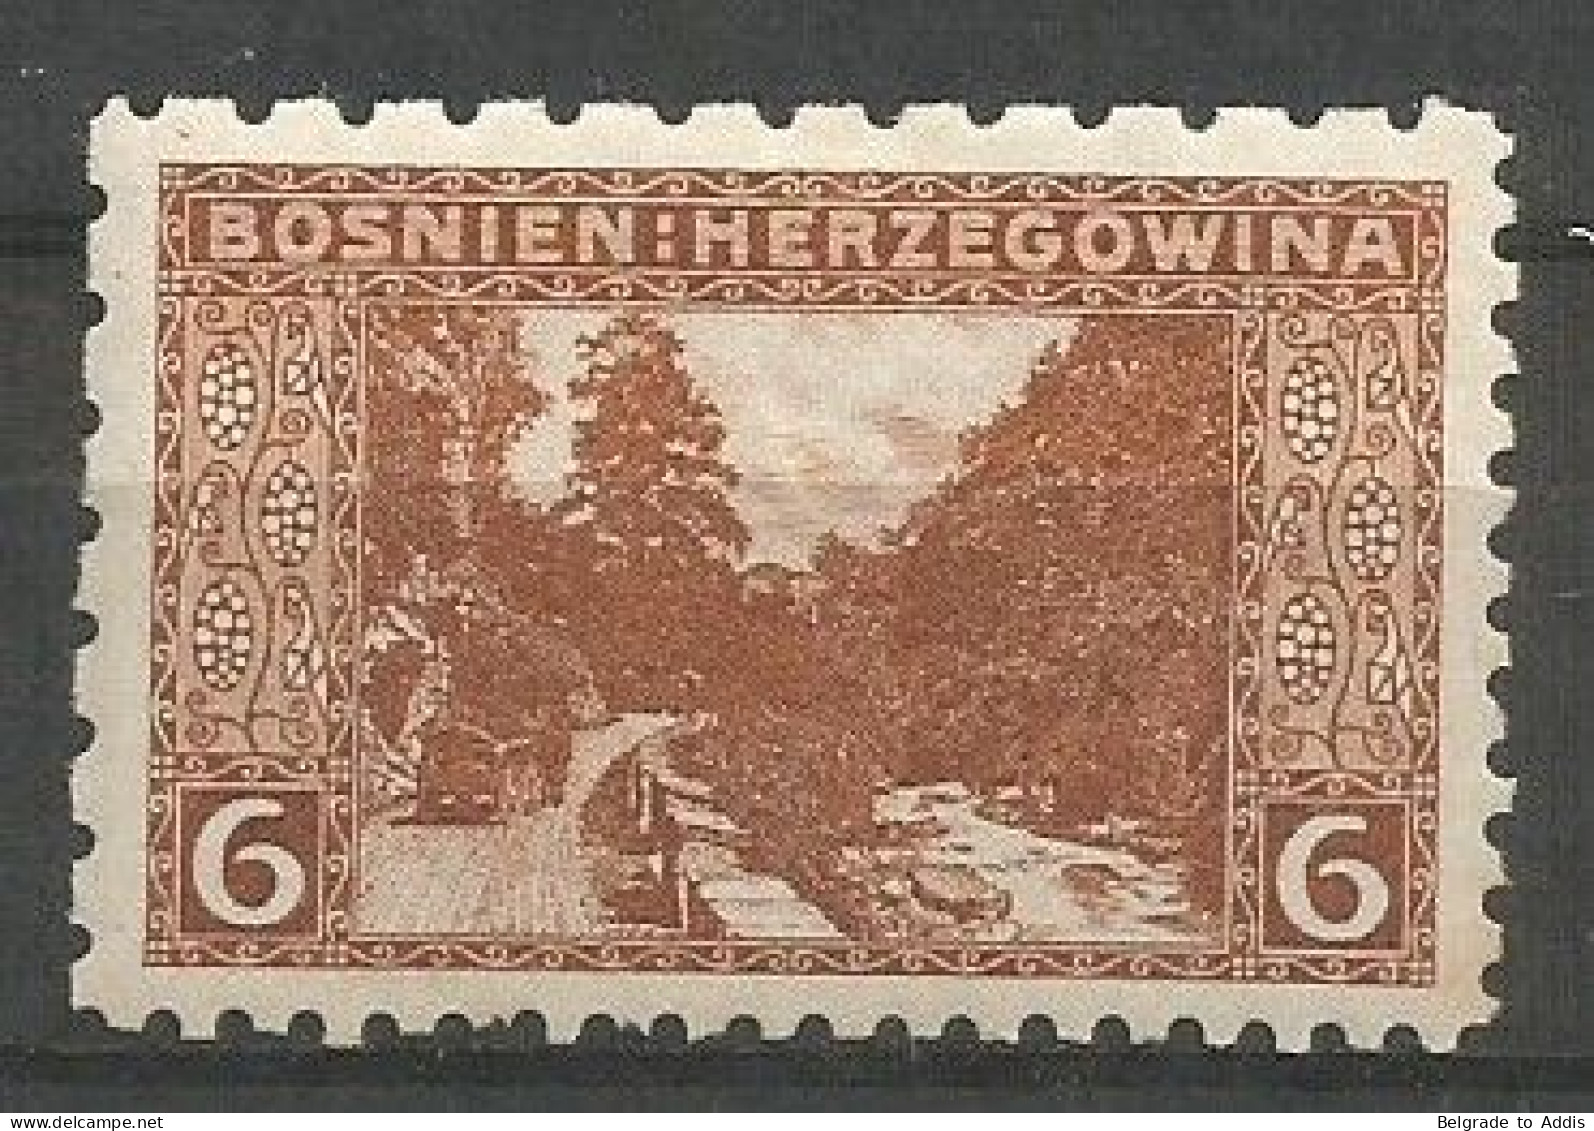 Bosnia Bosnien K.u.K. Austria Hungary Mi.33 Perforation 6½:9¼:9¼:6½ Coleman 1221 MH / * 1906 - Bosnien-Herzegowina